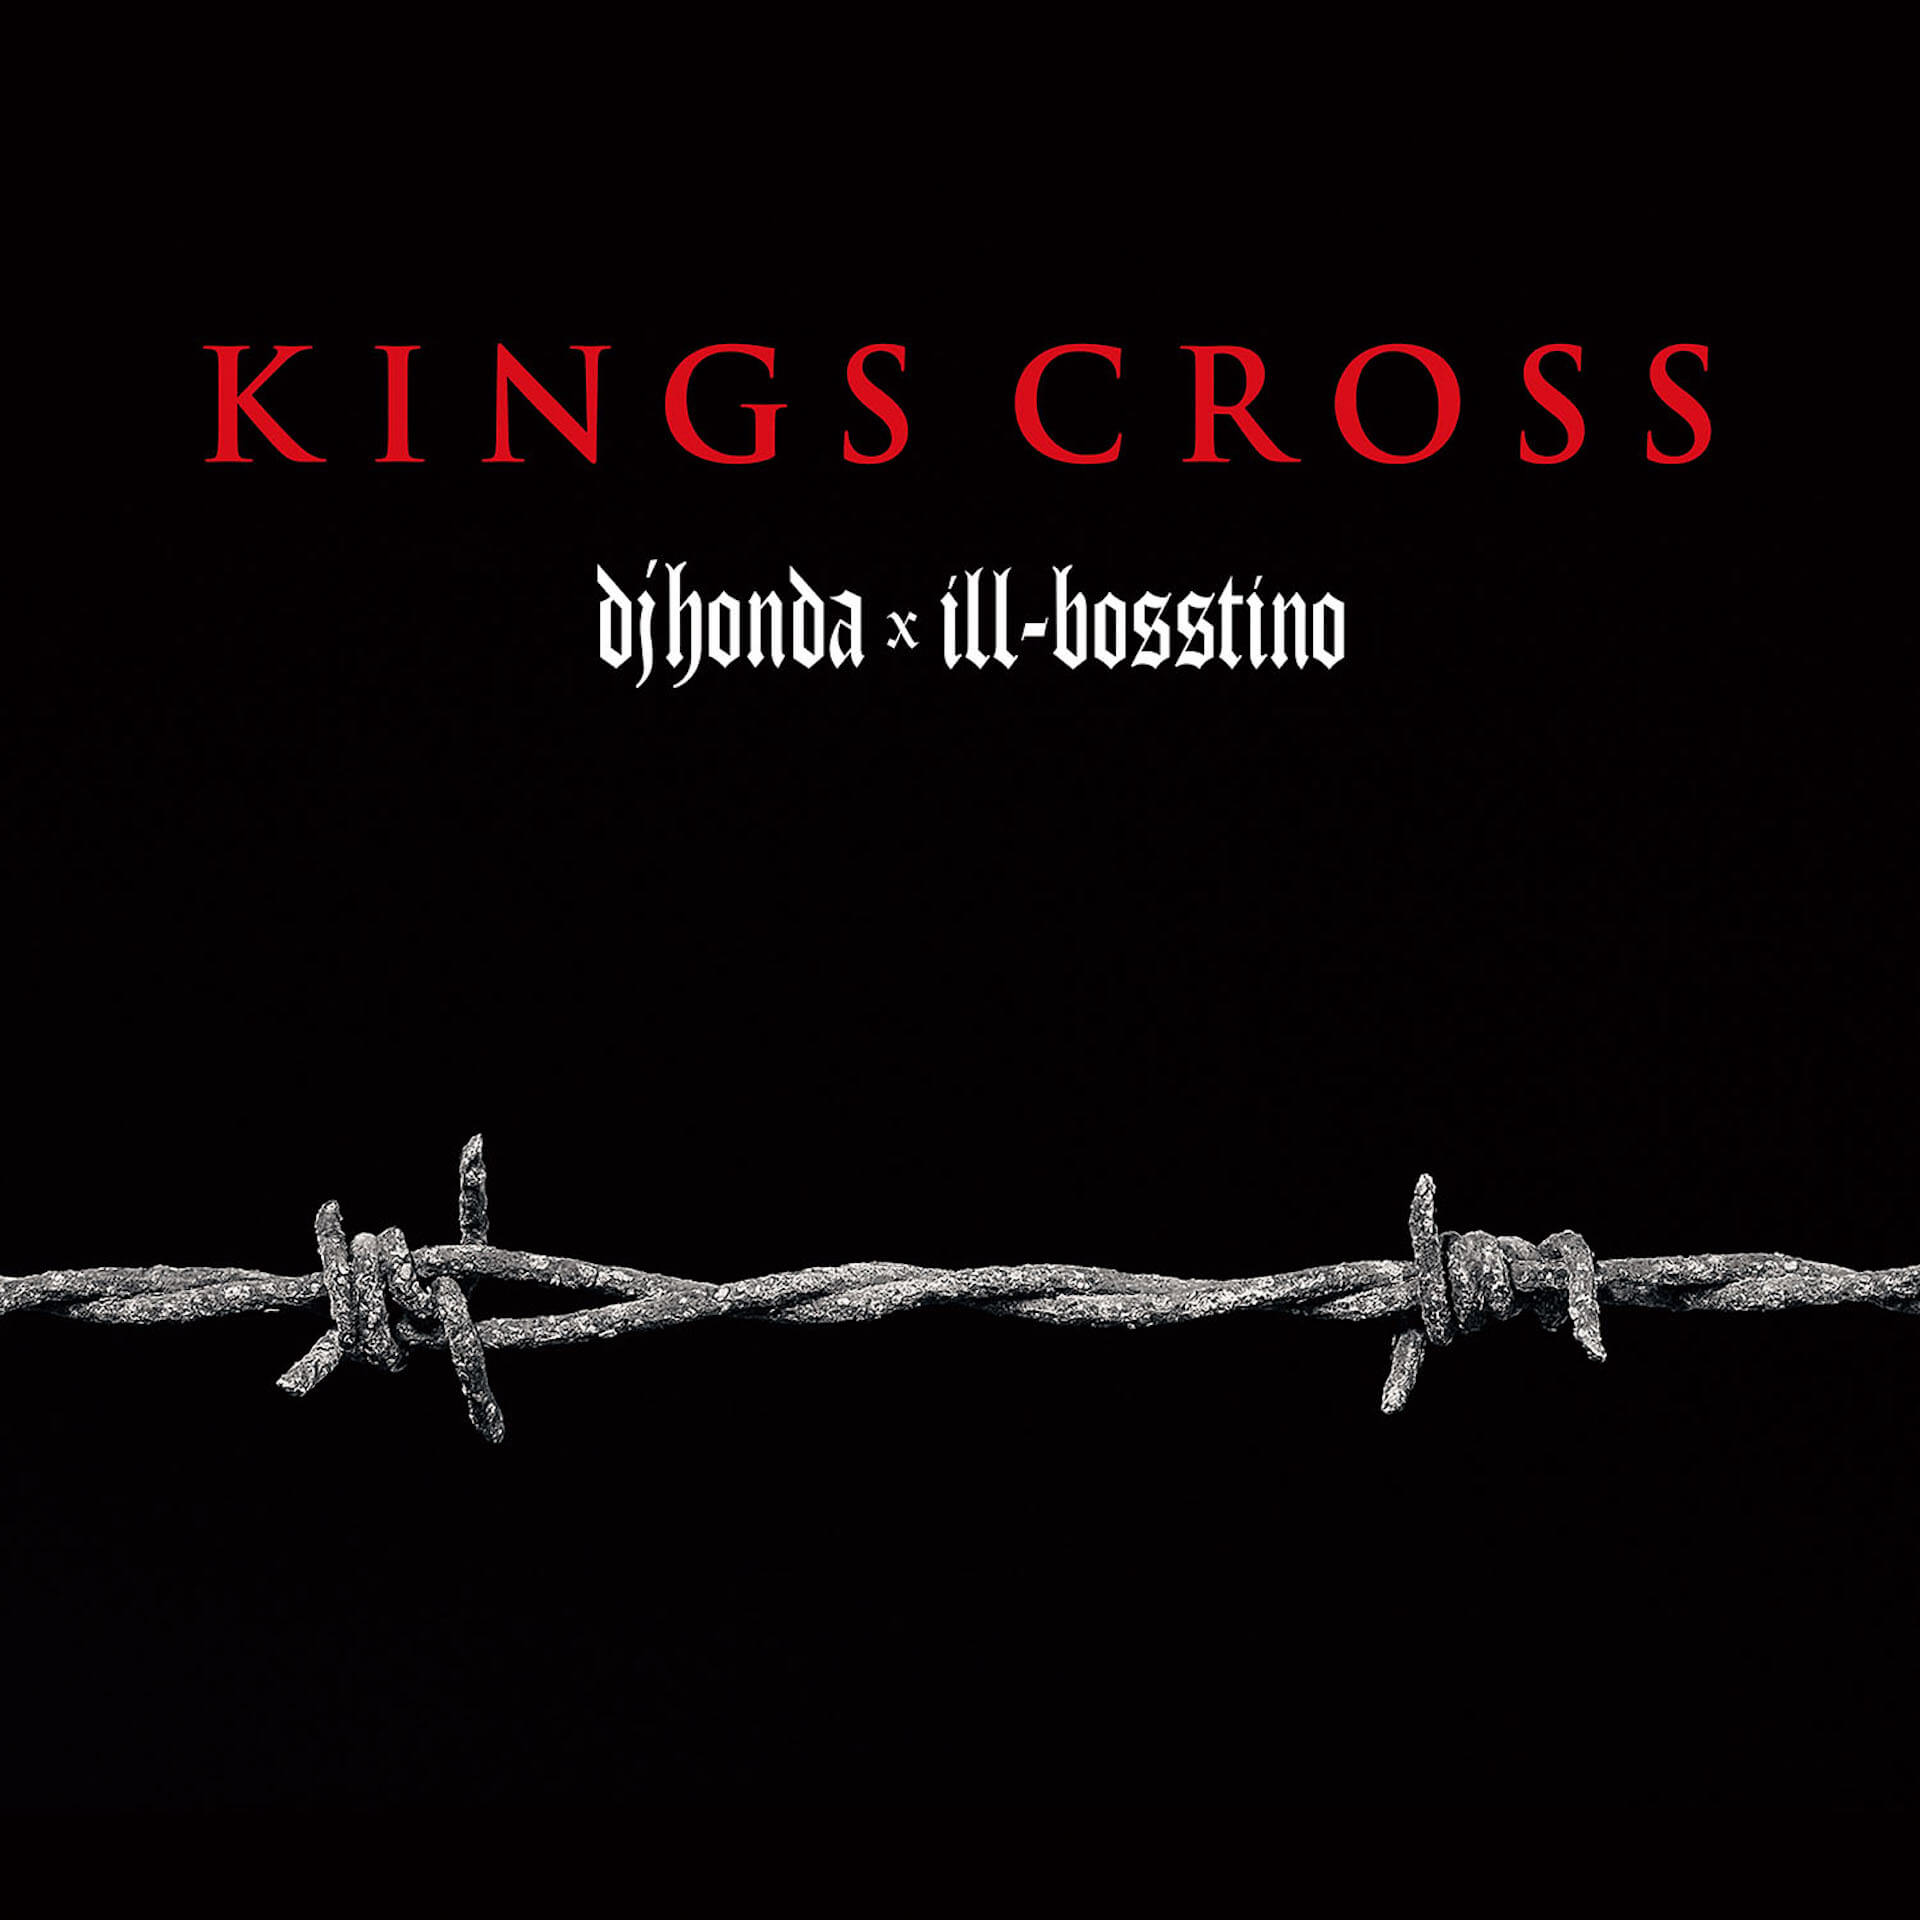 ILL-BOSSTINOとdj hondaのジョイントアルバム『KINGS CROSS』から"SEE YOU THERE"のMVが公開！ music211101_kingscross_2